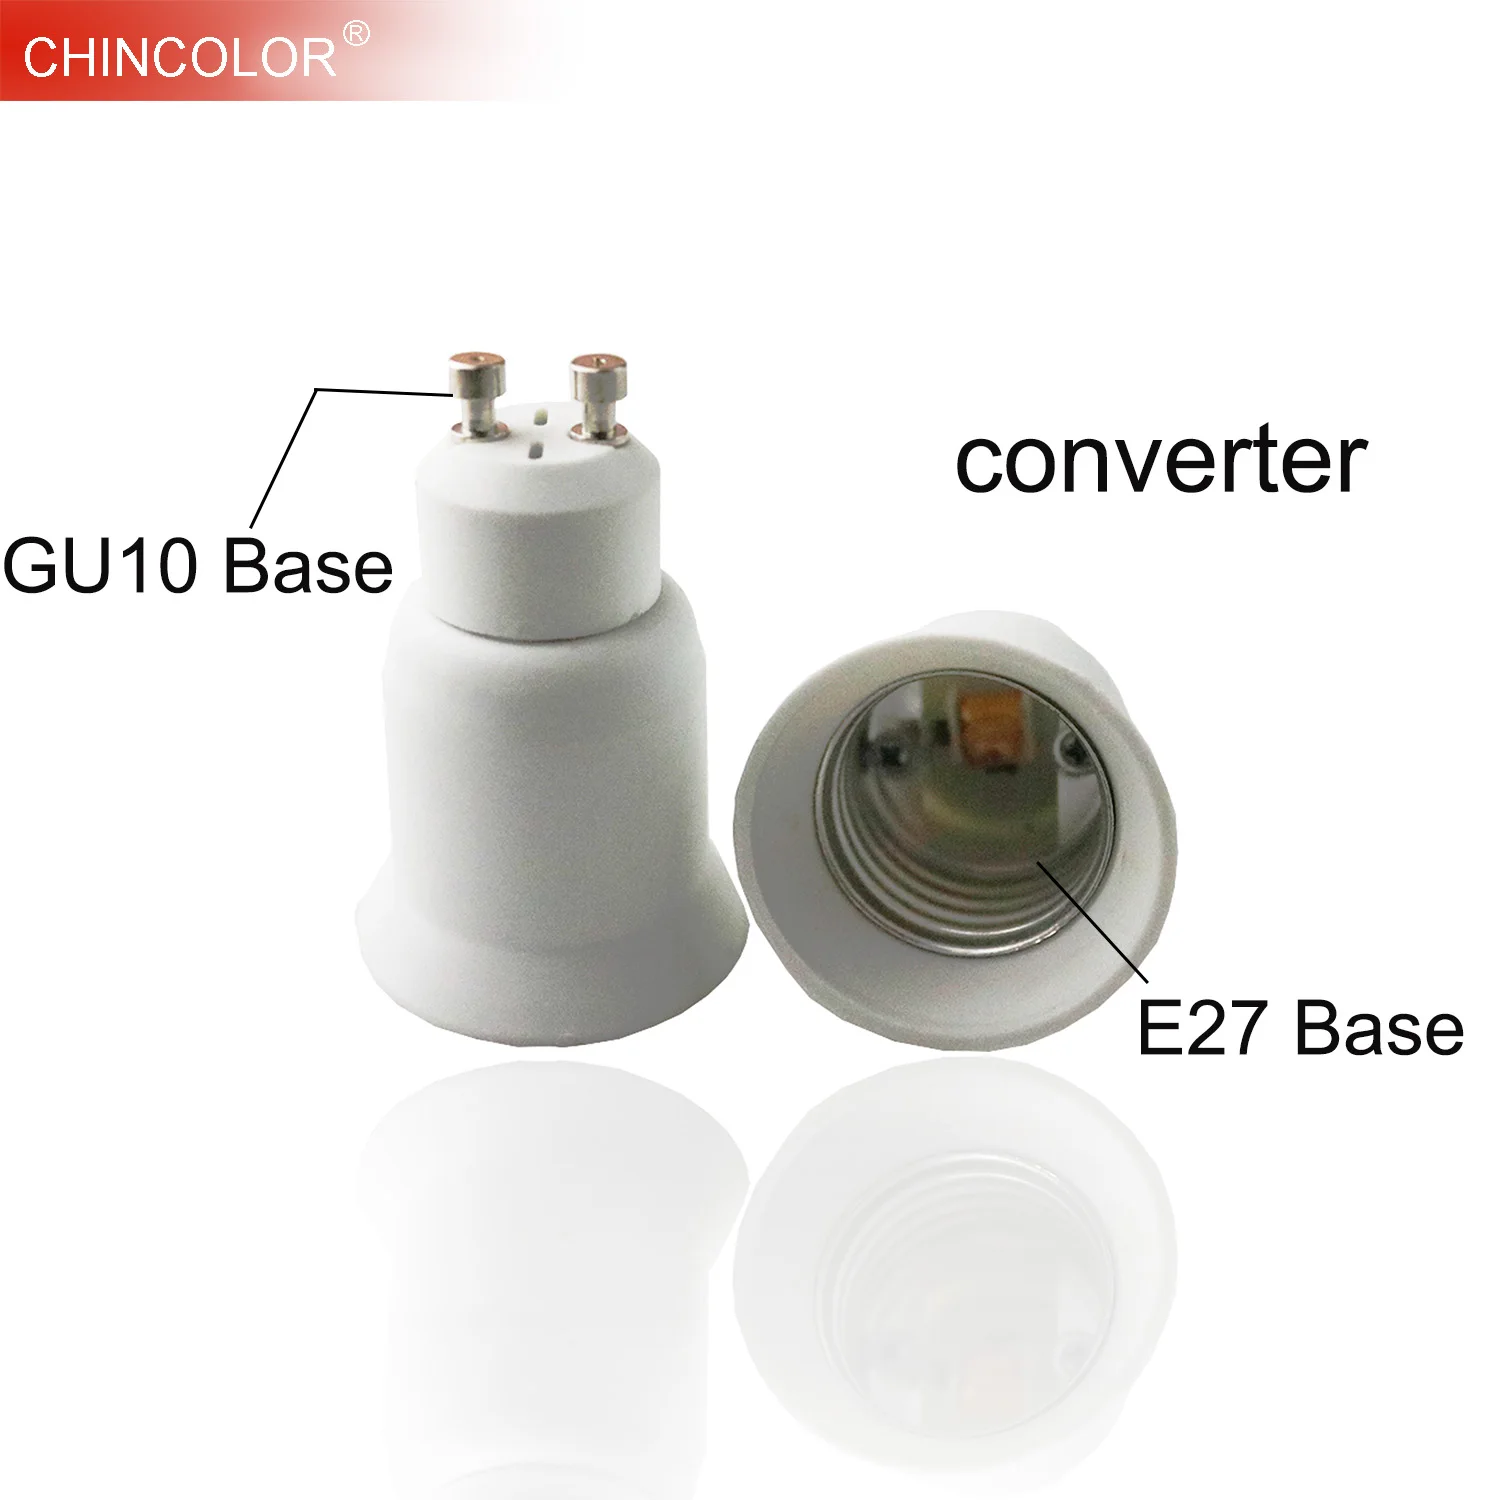 4x GU10 To GU10 Light Bulb Lamp Adaptor Converter Holder 52mm Socket Extender 